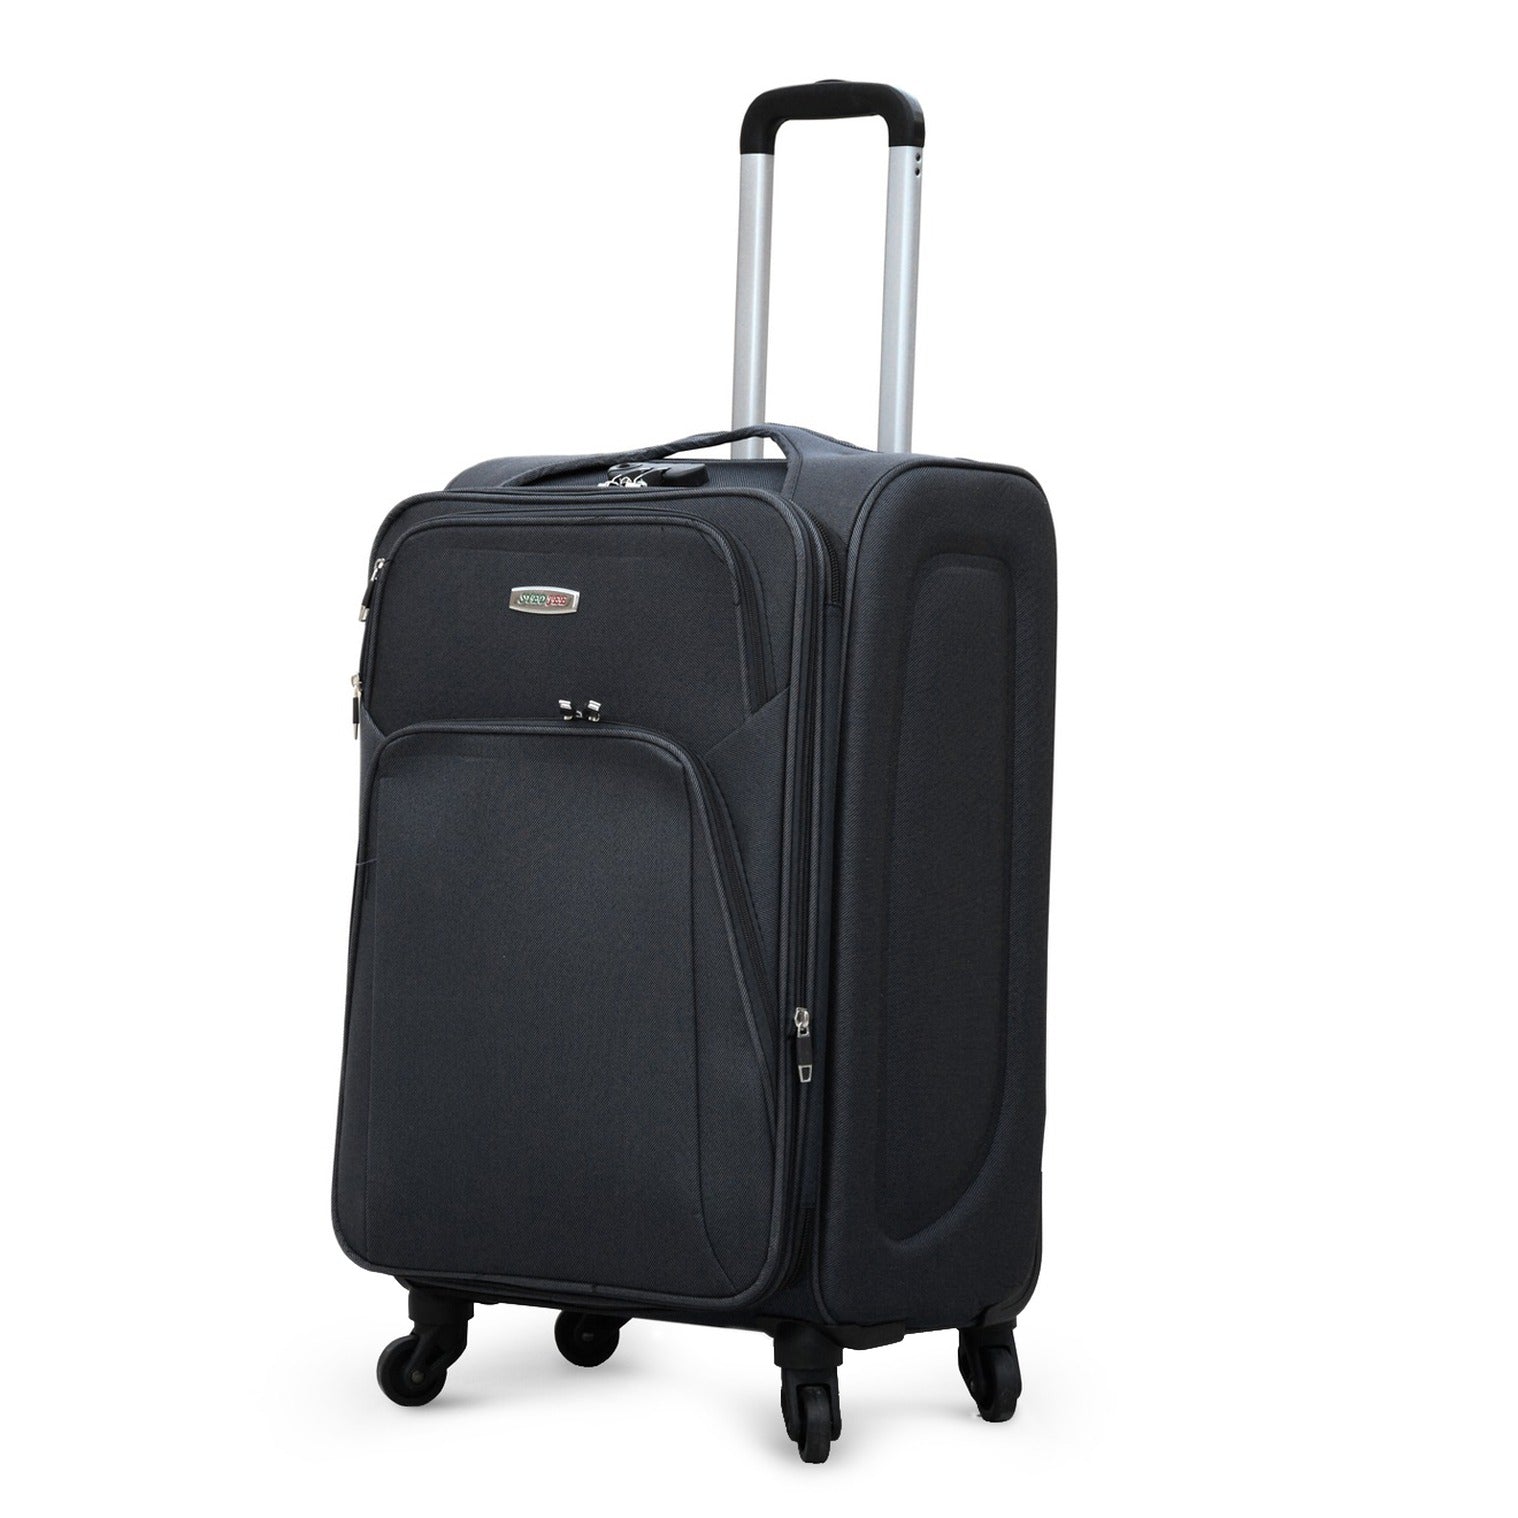 32" Black Colour SJ JIAN 4 Wheel Luggage Lightweight Soft Material Trolley Bag